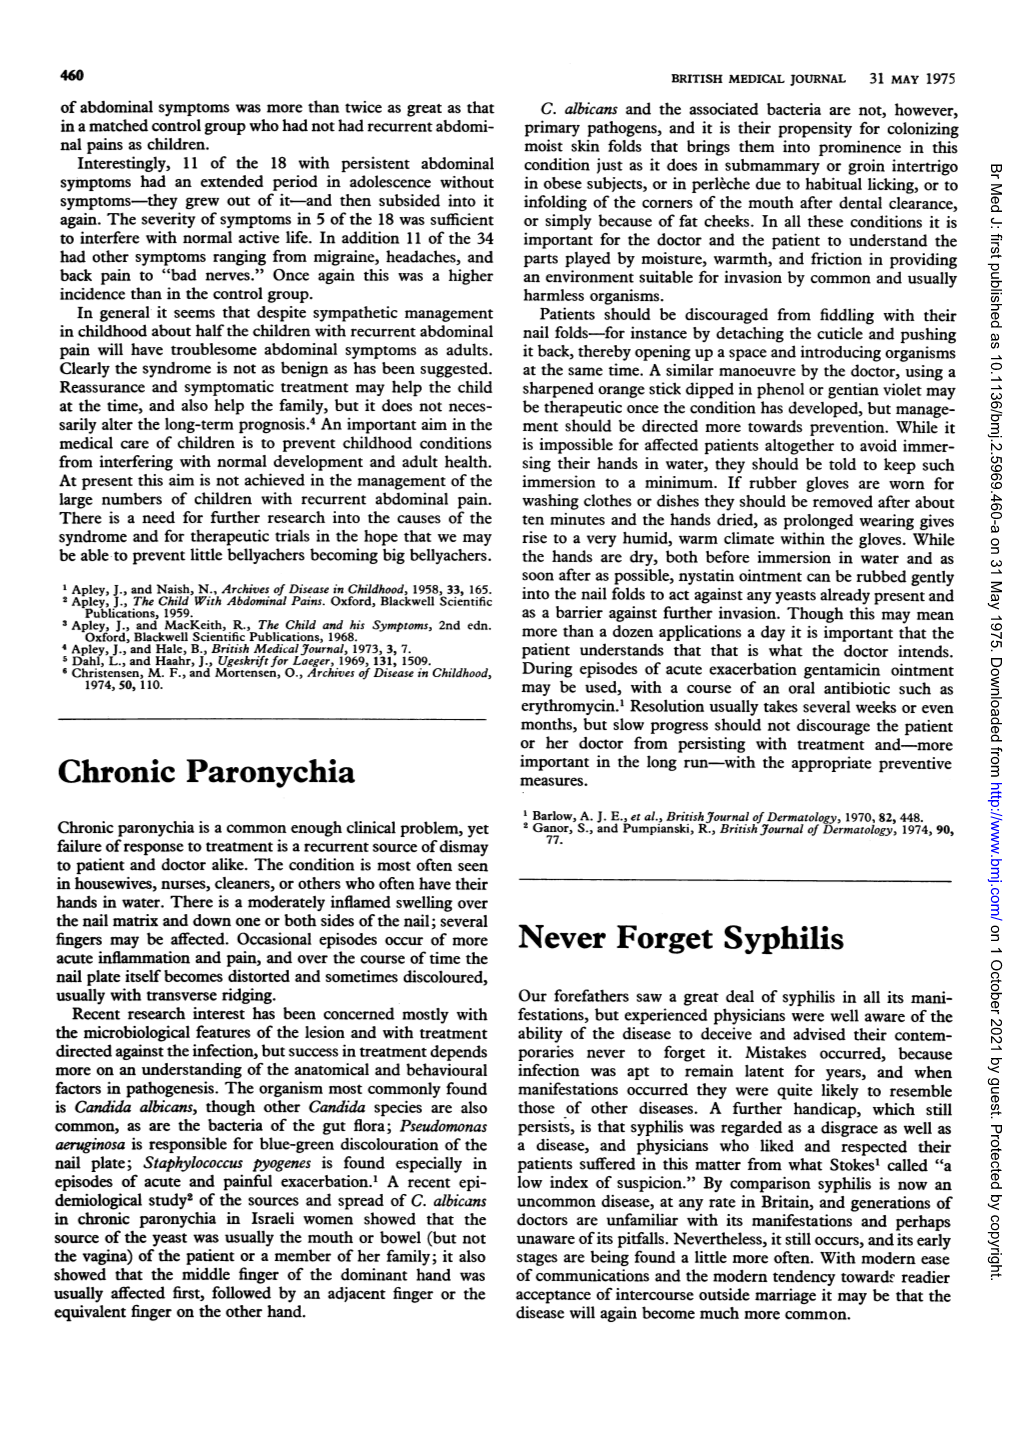 Chronic Paronychia Measures